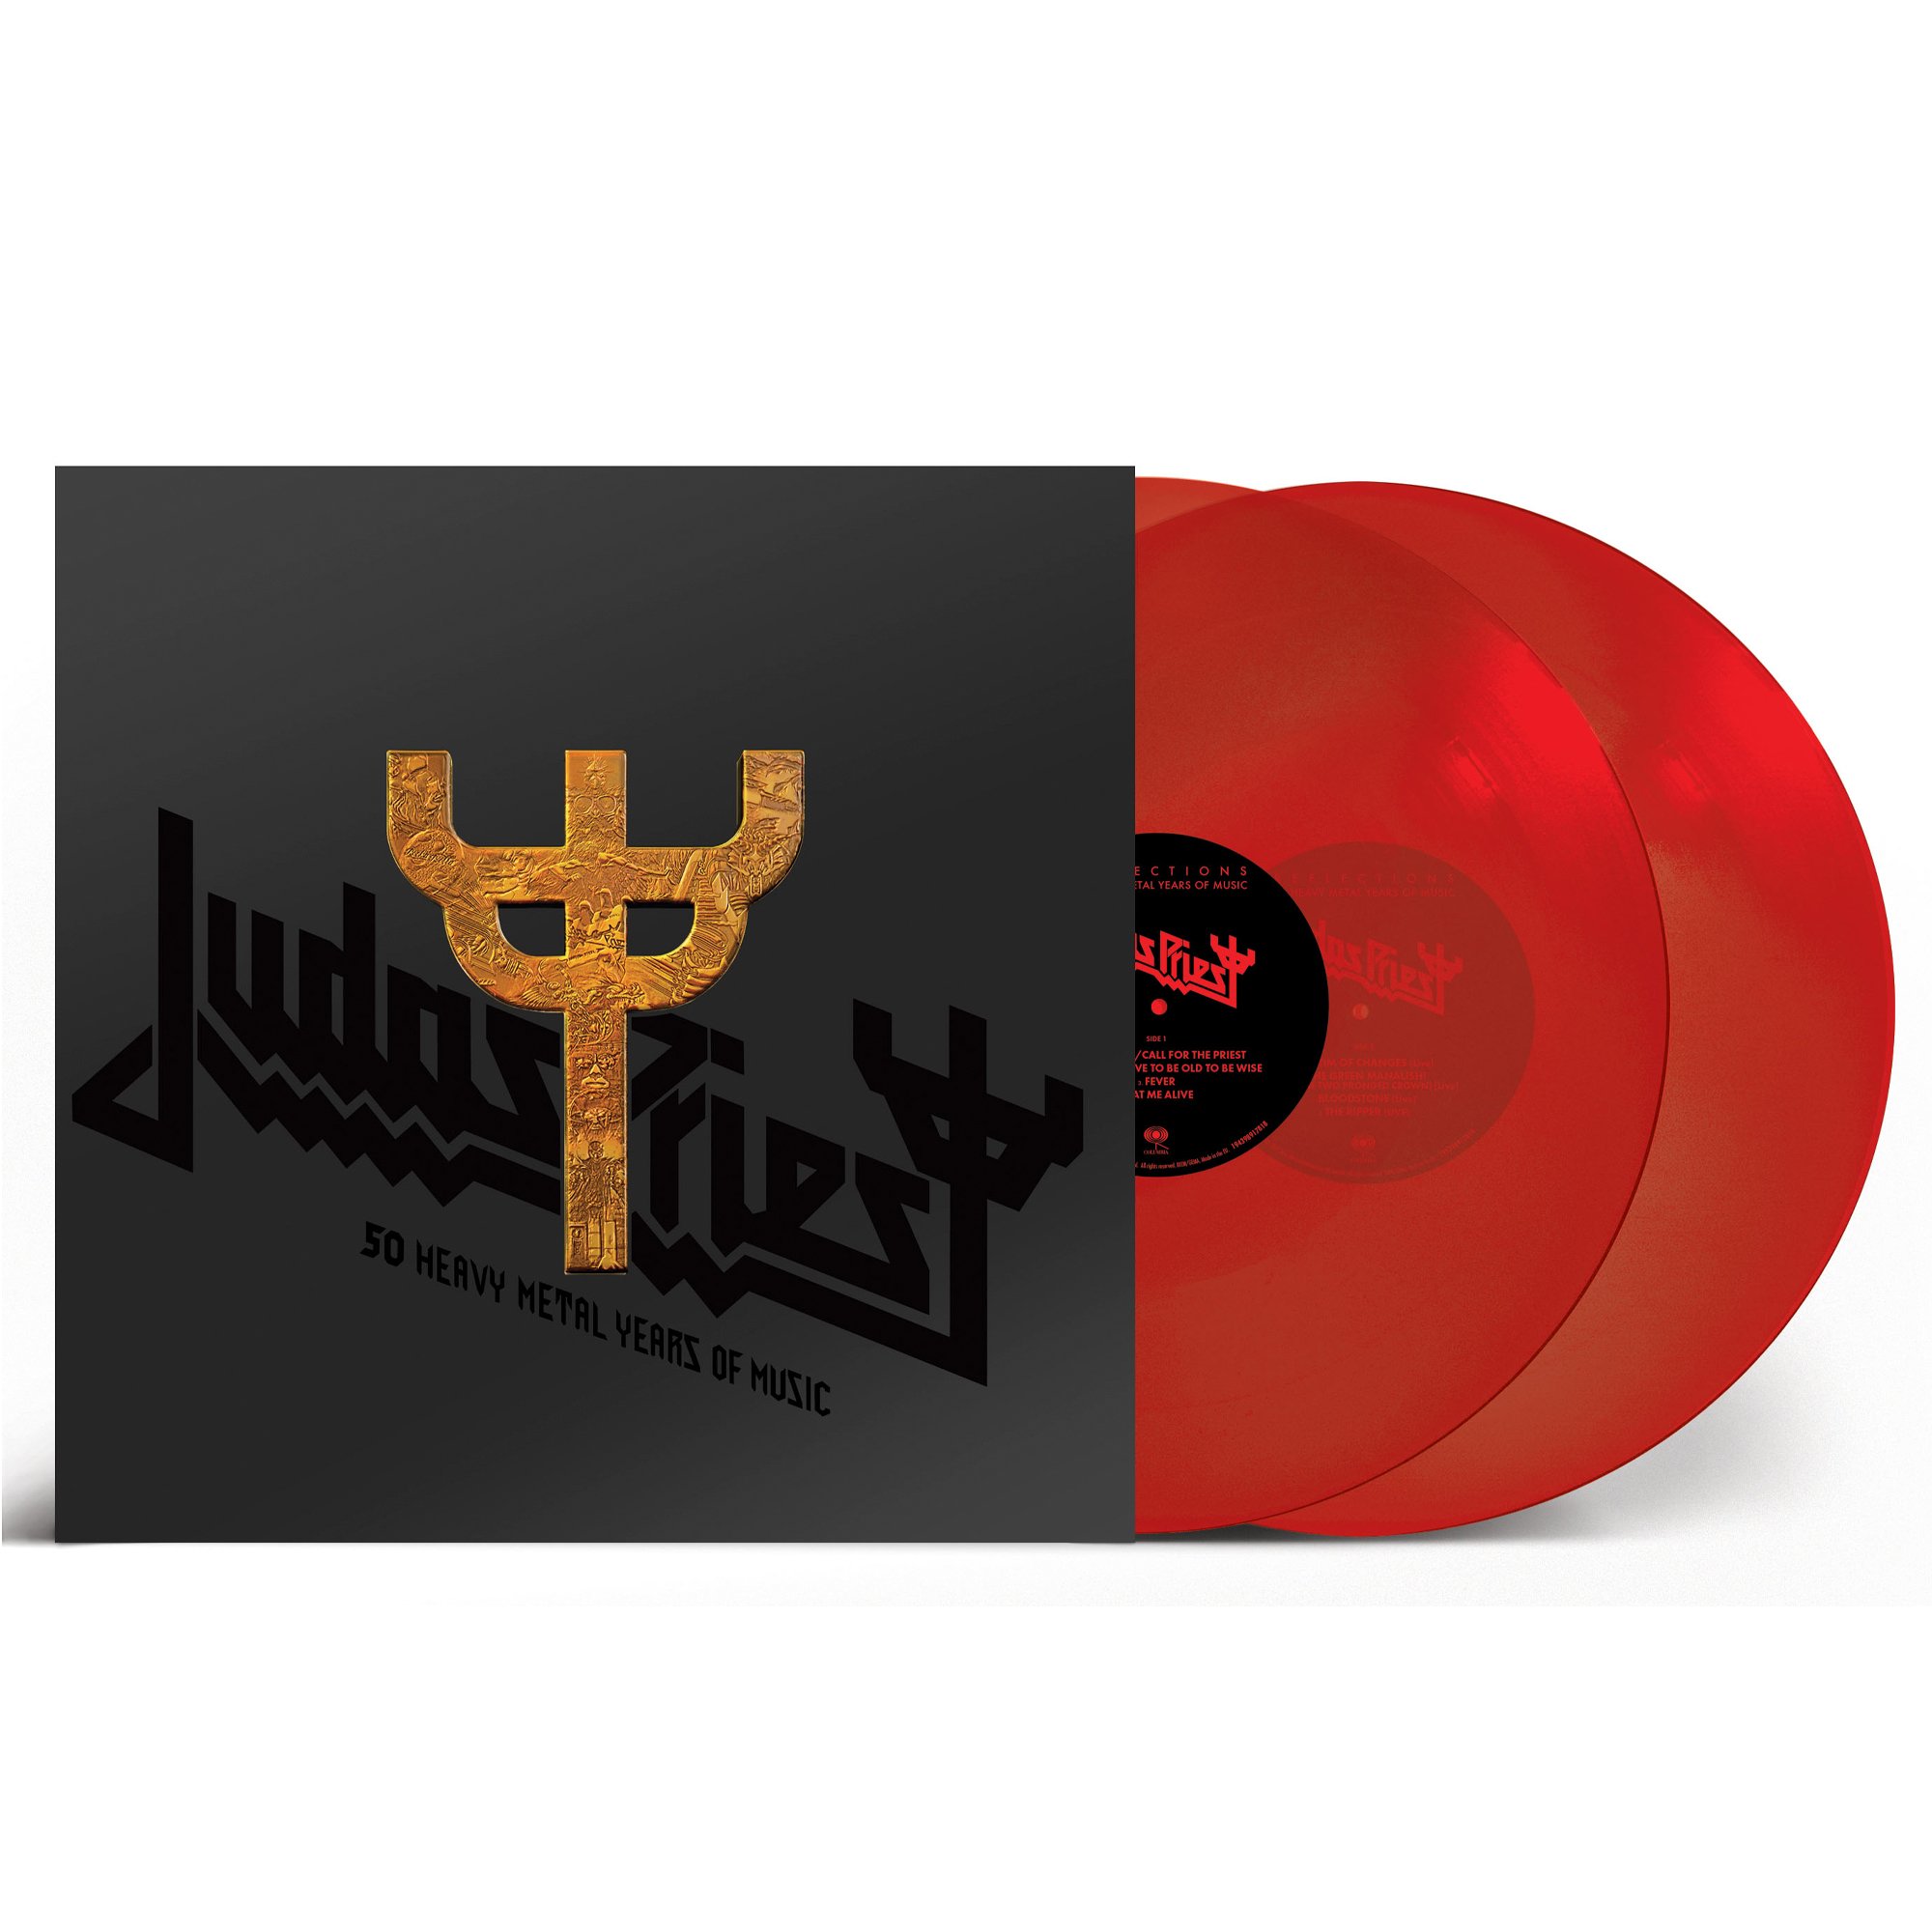 [LP] JUDAS PRIEST - 50 Heavy Metal Years of Music (2 x 레드컬러바이닐)